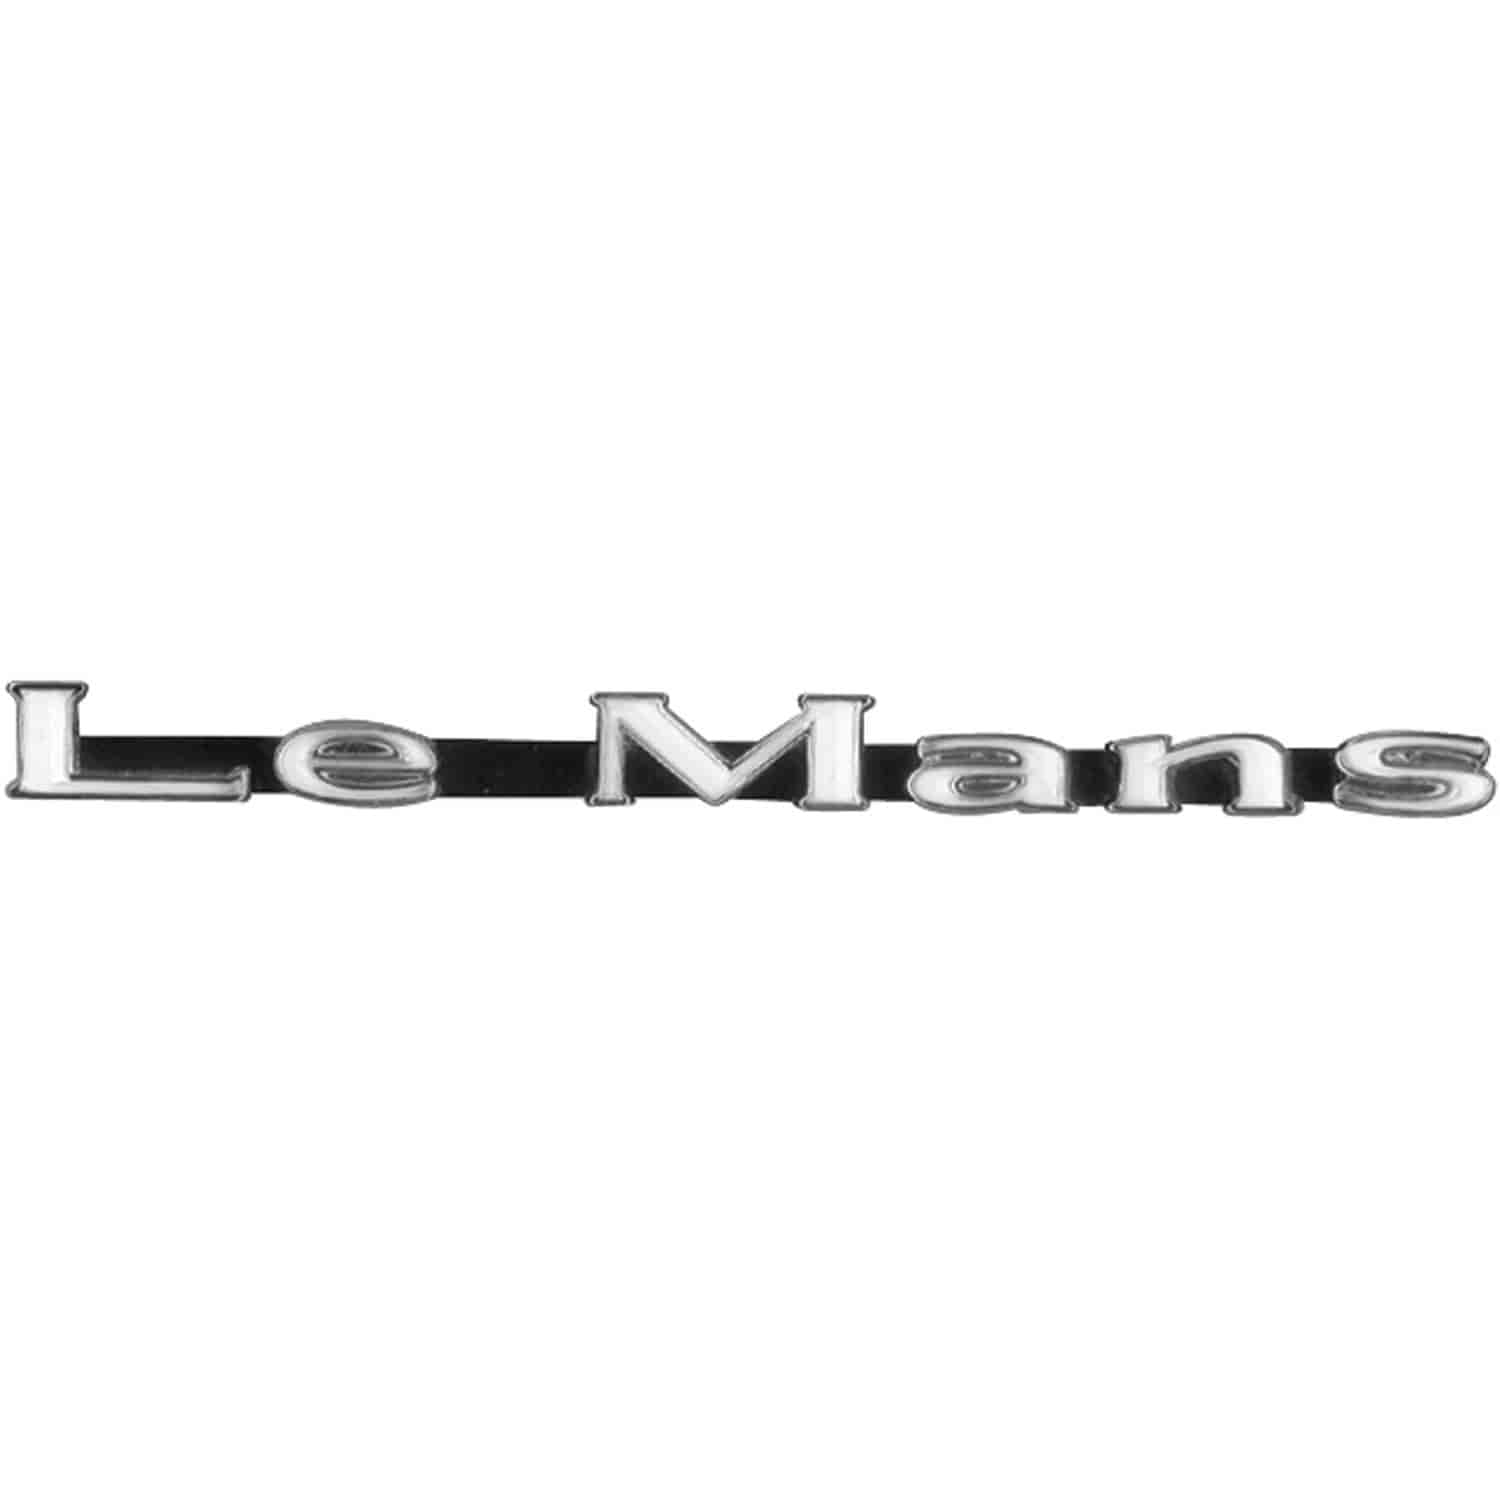 Emblem Trunk Lid 1969 LeMans